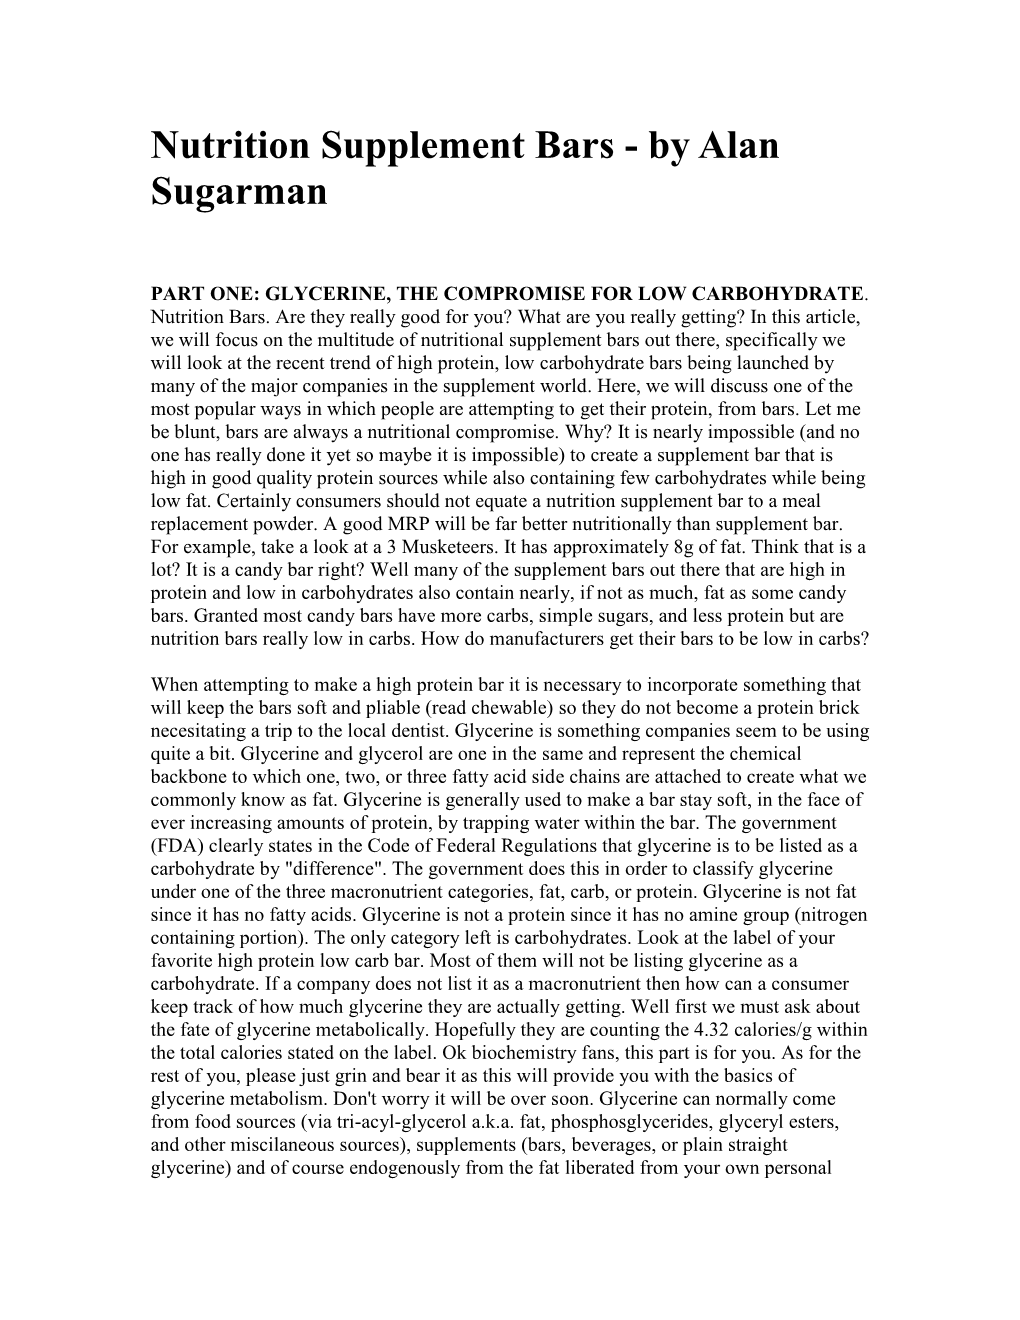 Supplement Bars - by Alan Sugarman